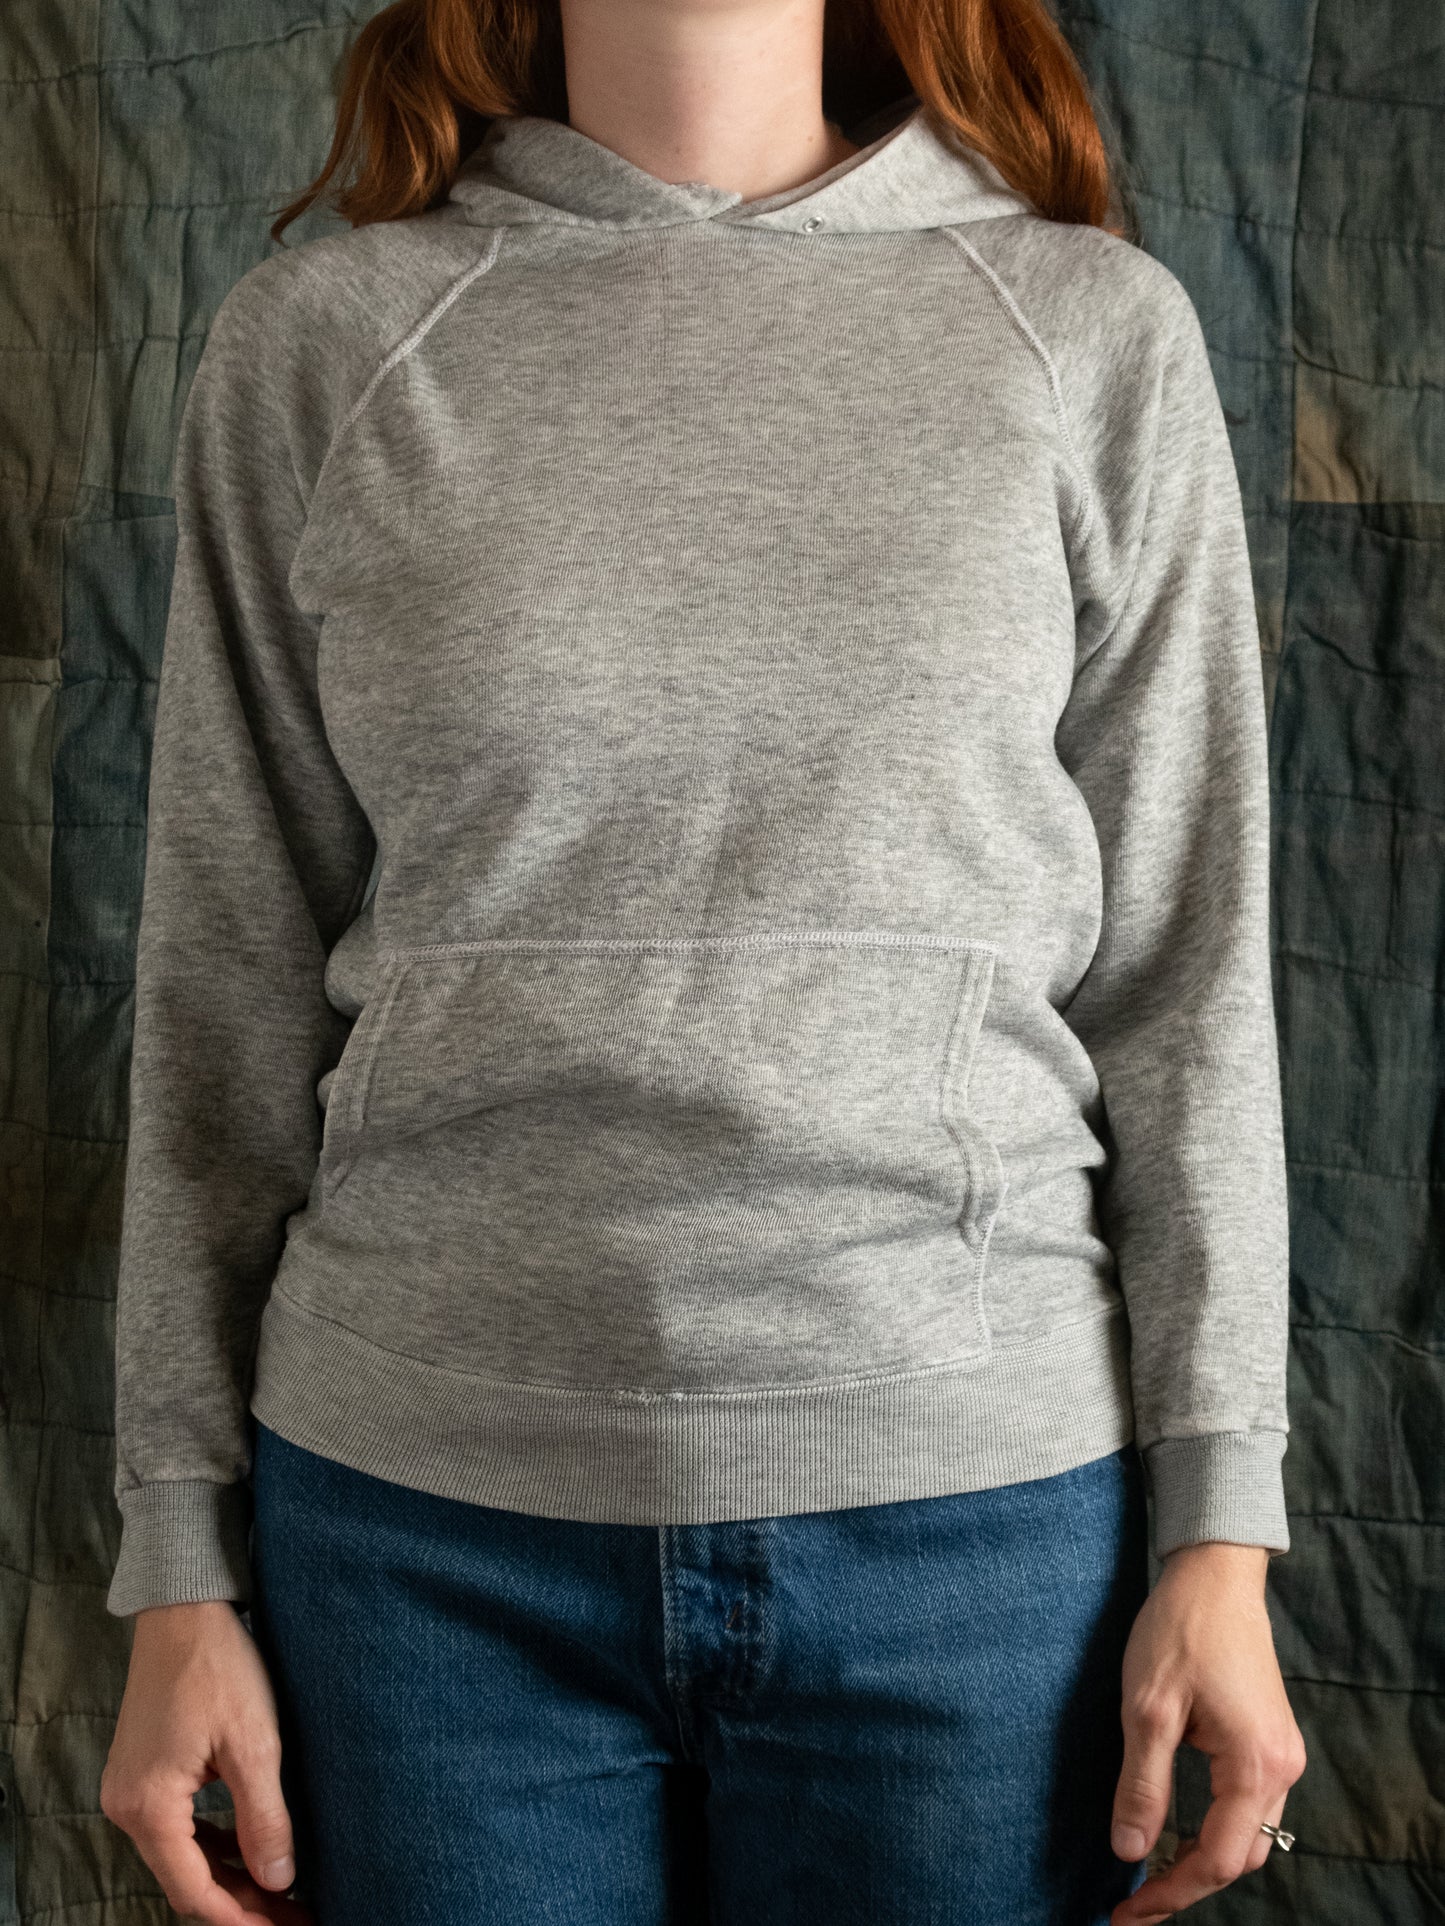 1970s Blank Heather Grey Hooded Sweatshirt Size M